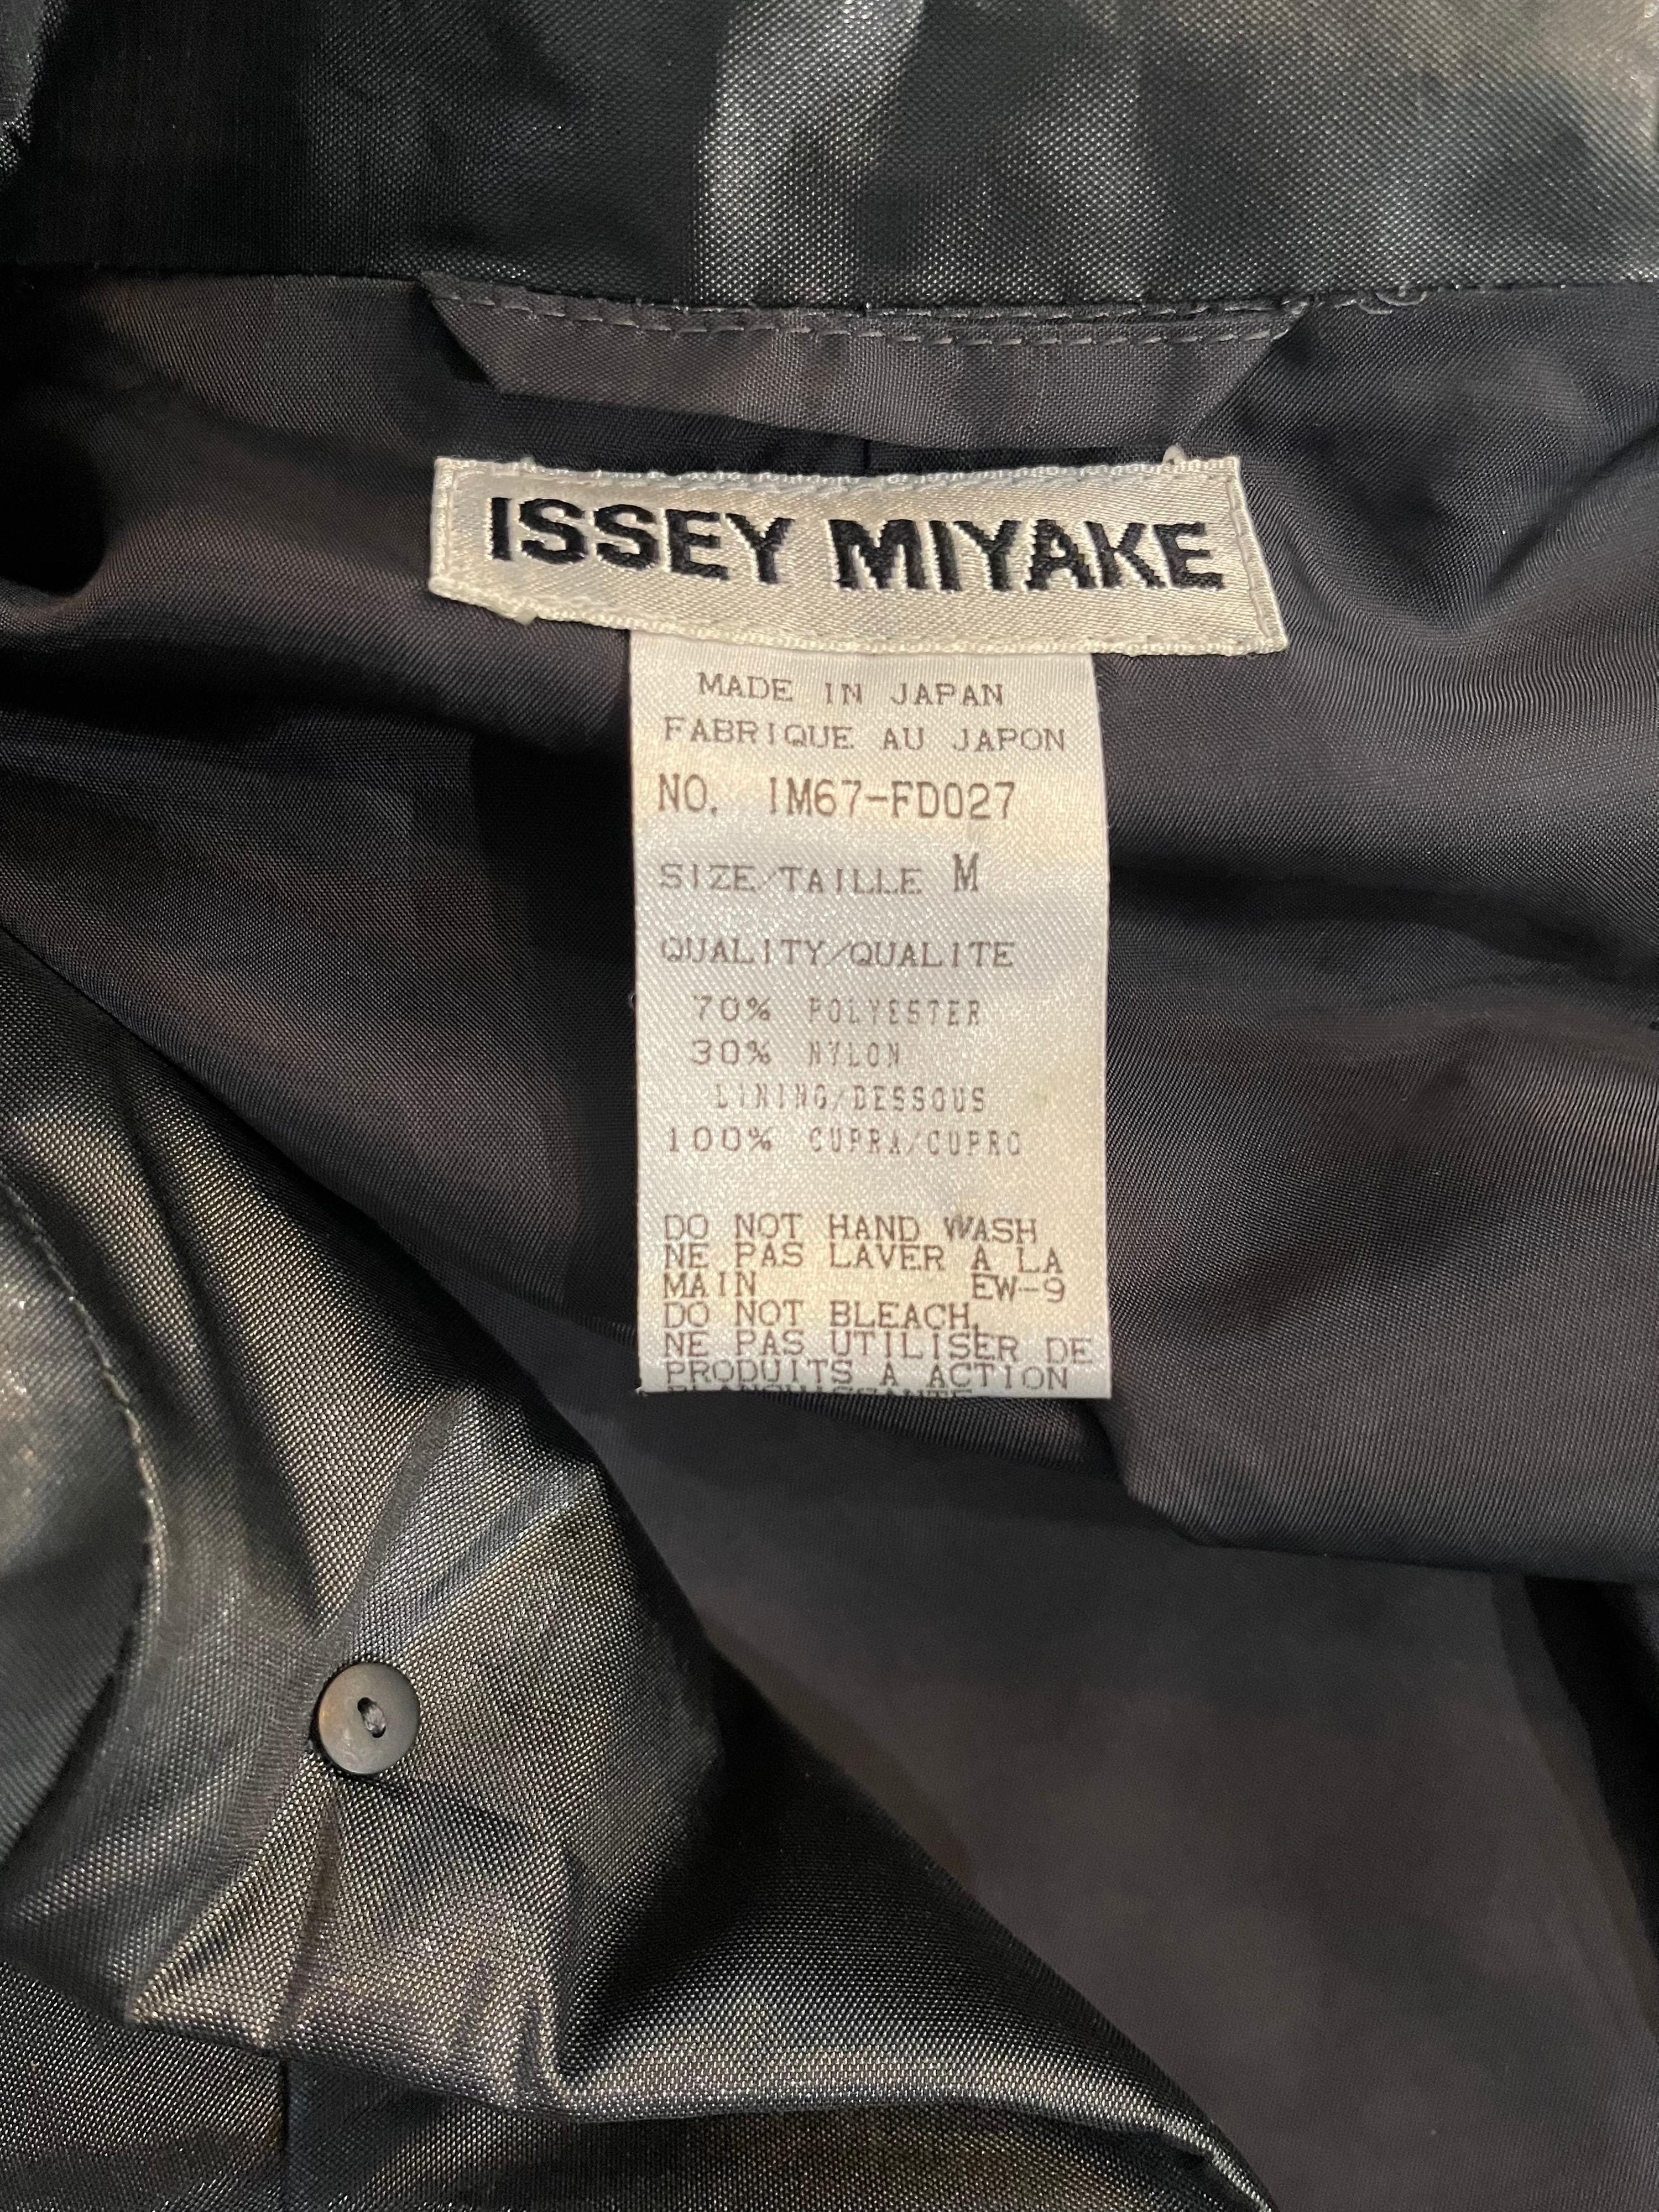 sharkskin leather jacket